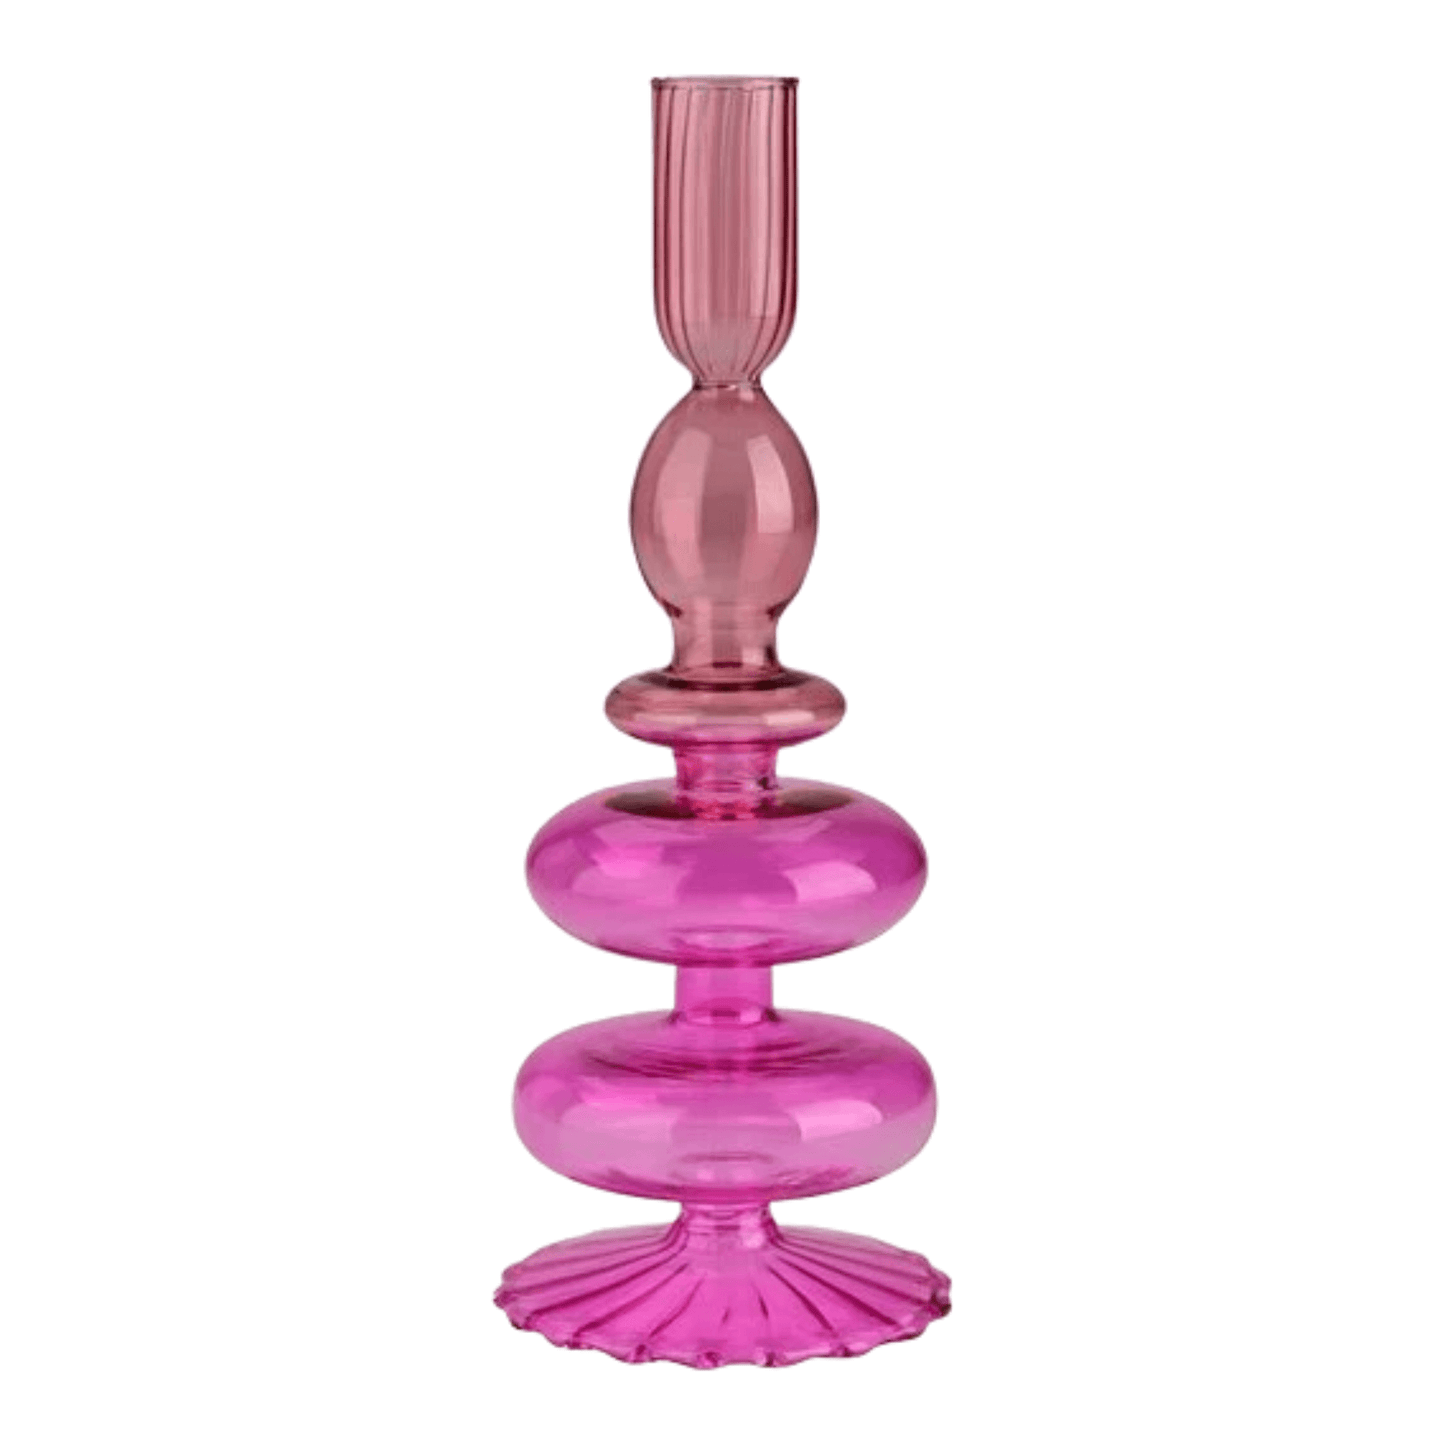 Glazen kandelaar roze/lila